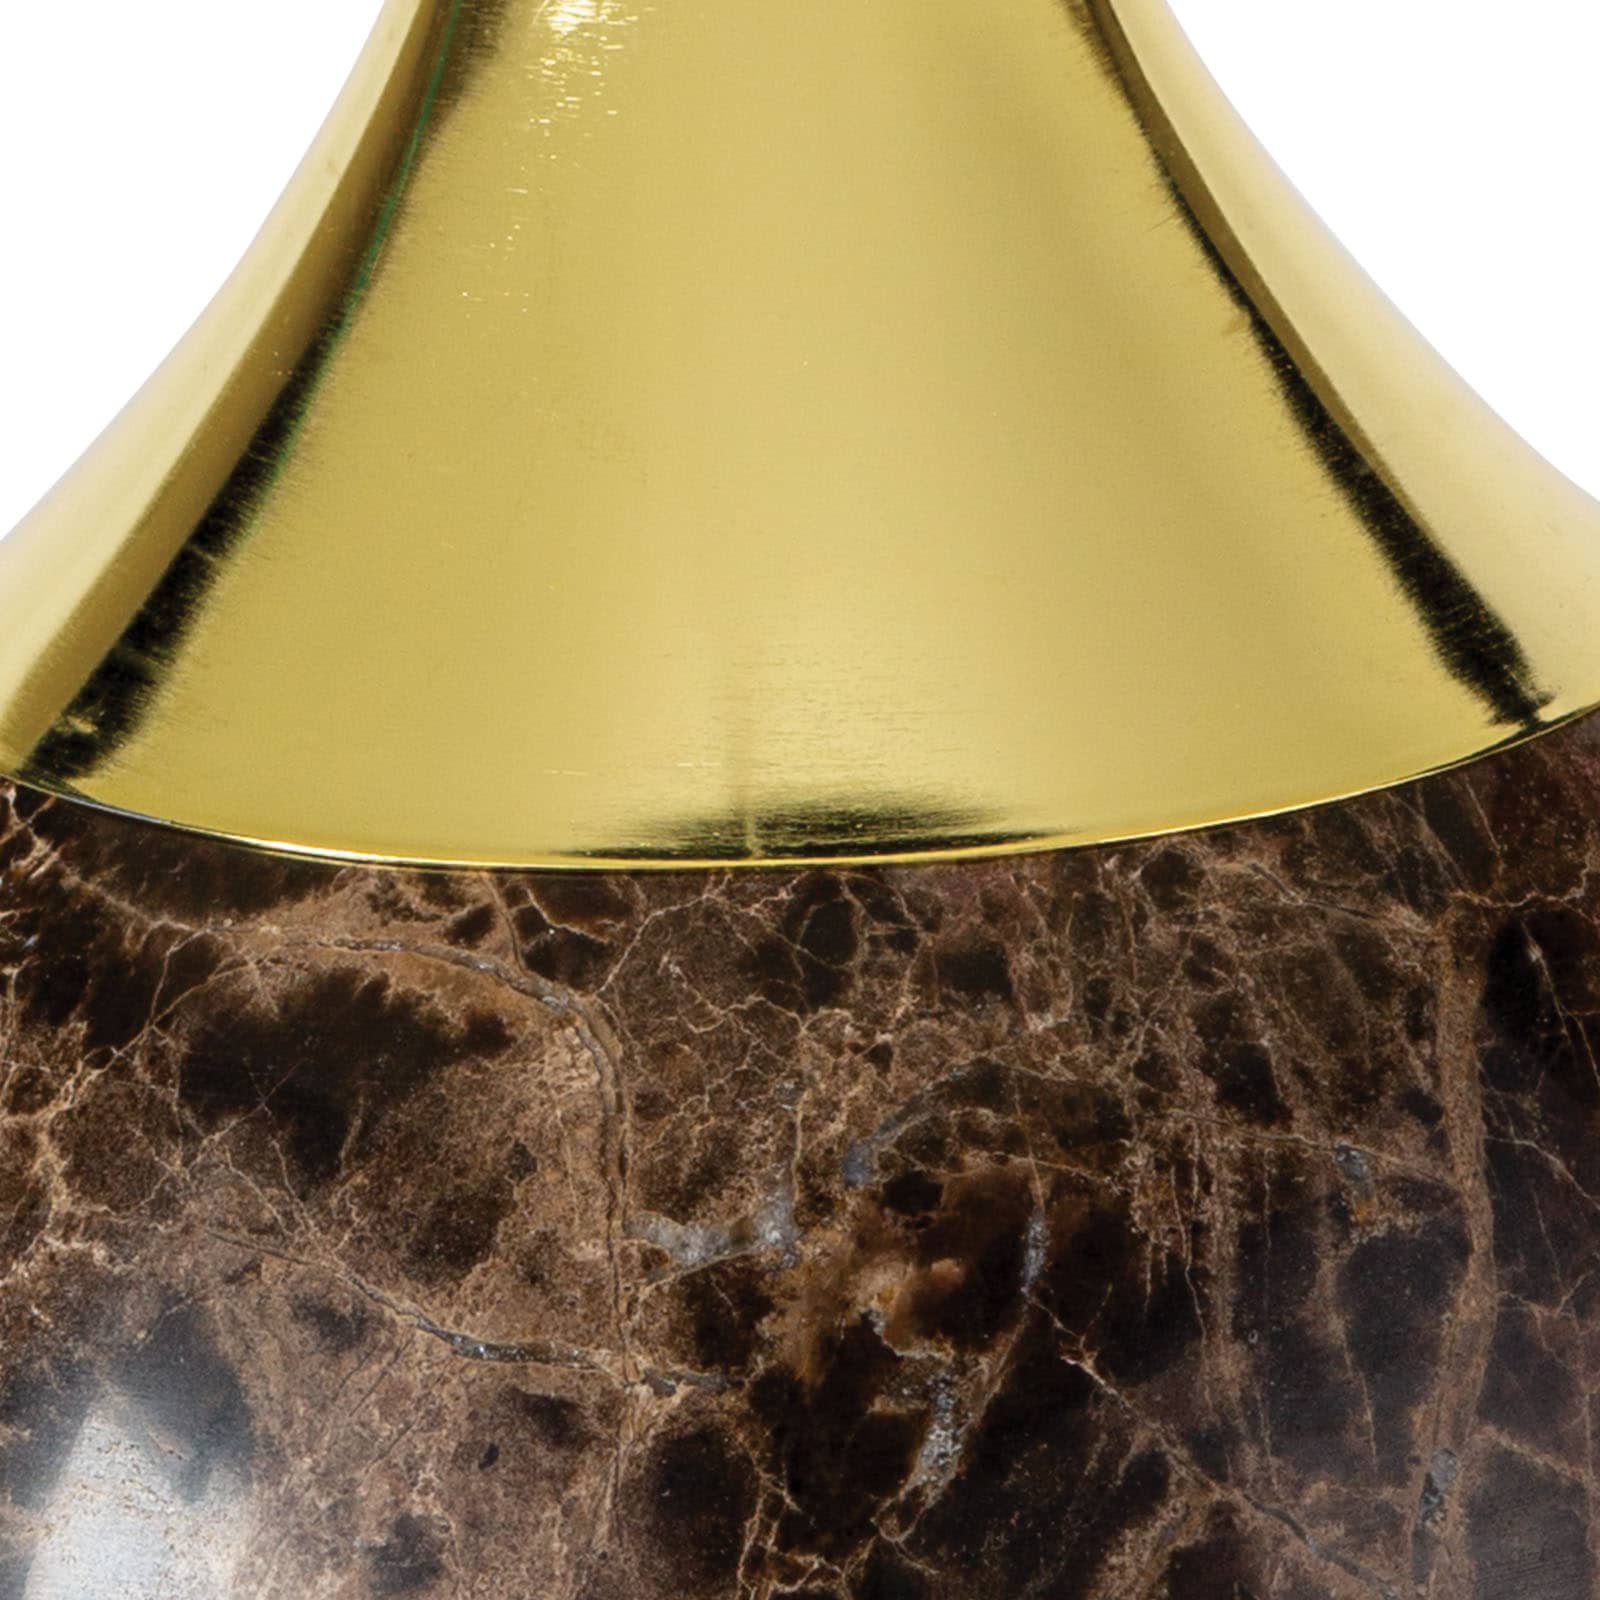 Regina Andrew Barrett Marble Mini Lamp in Gold